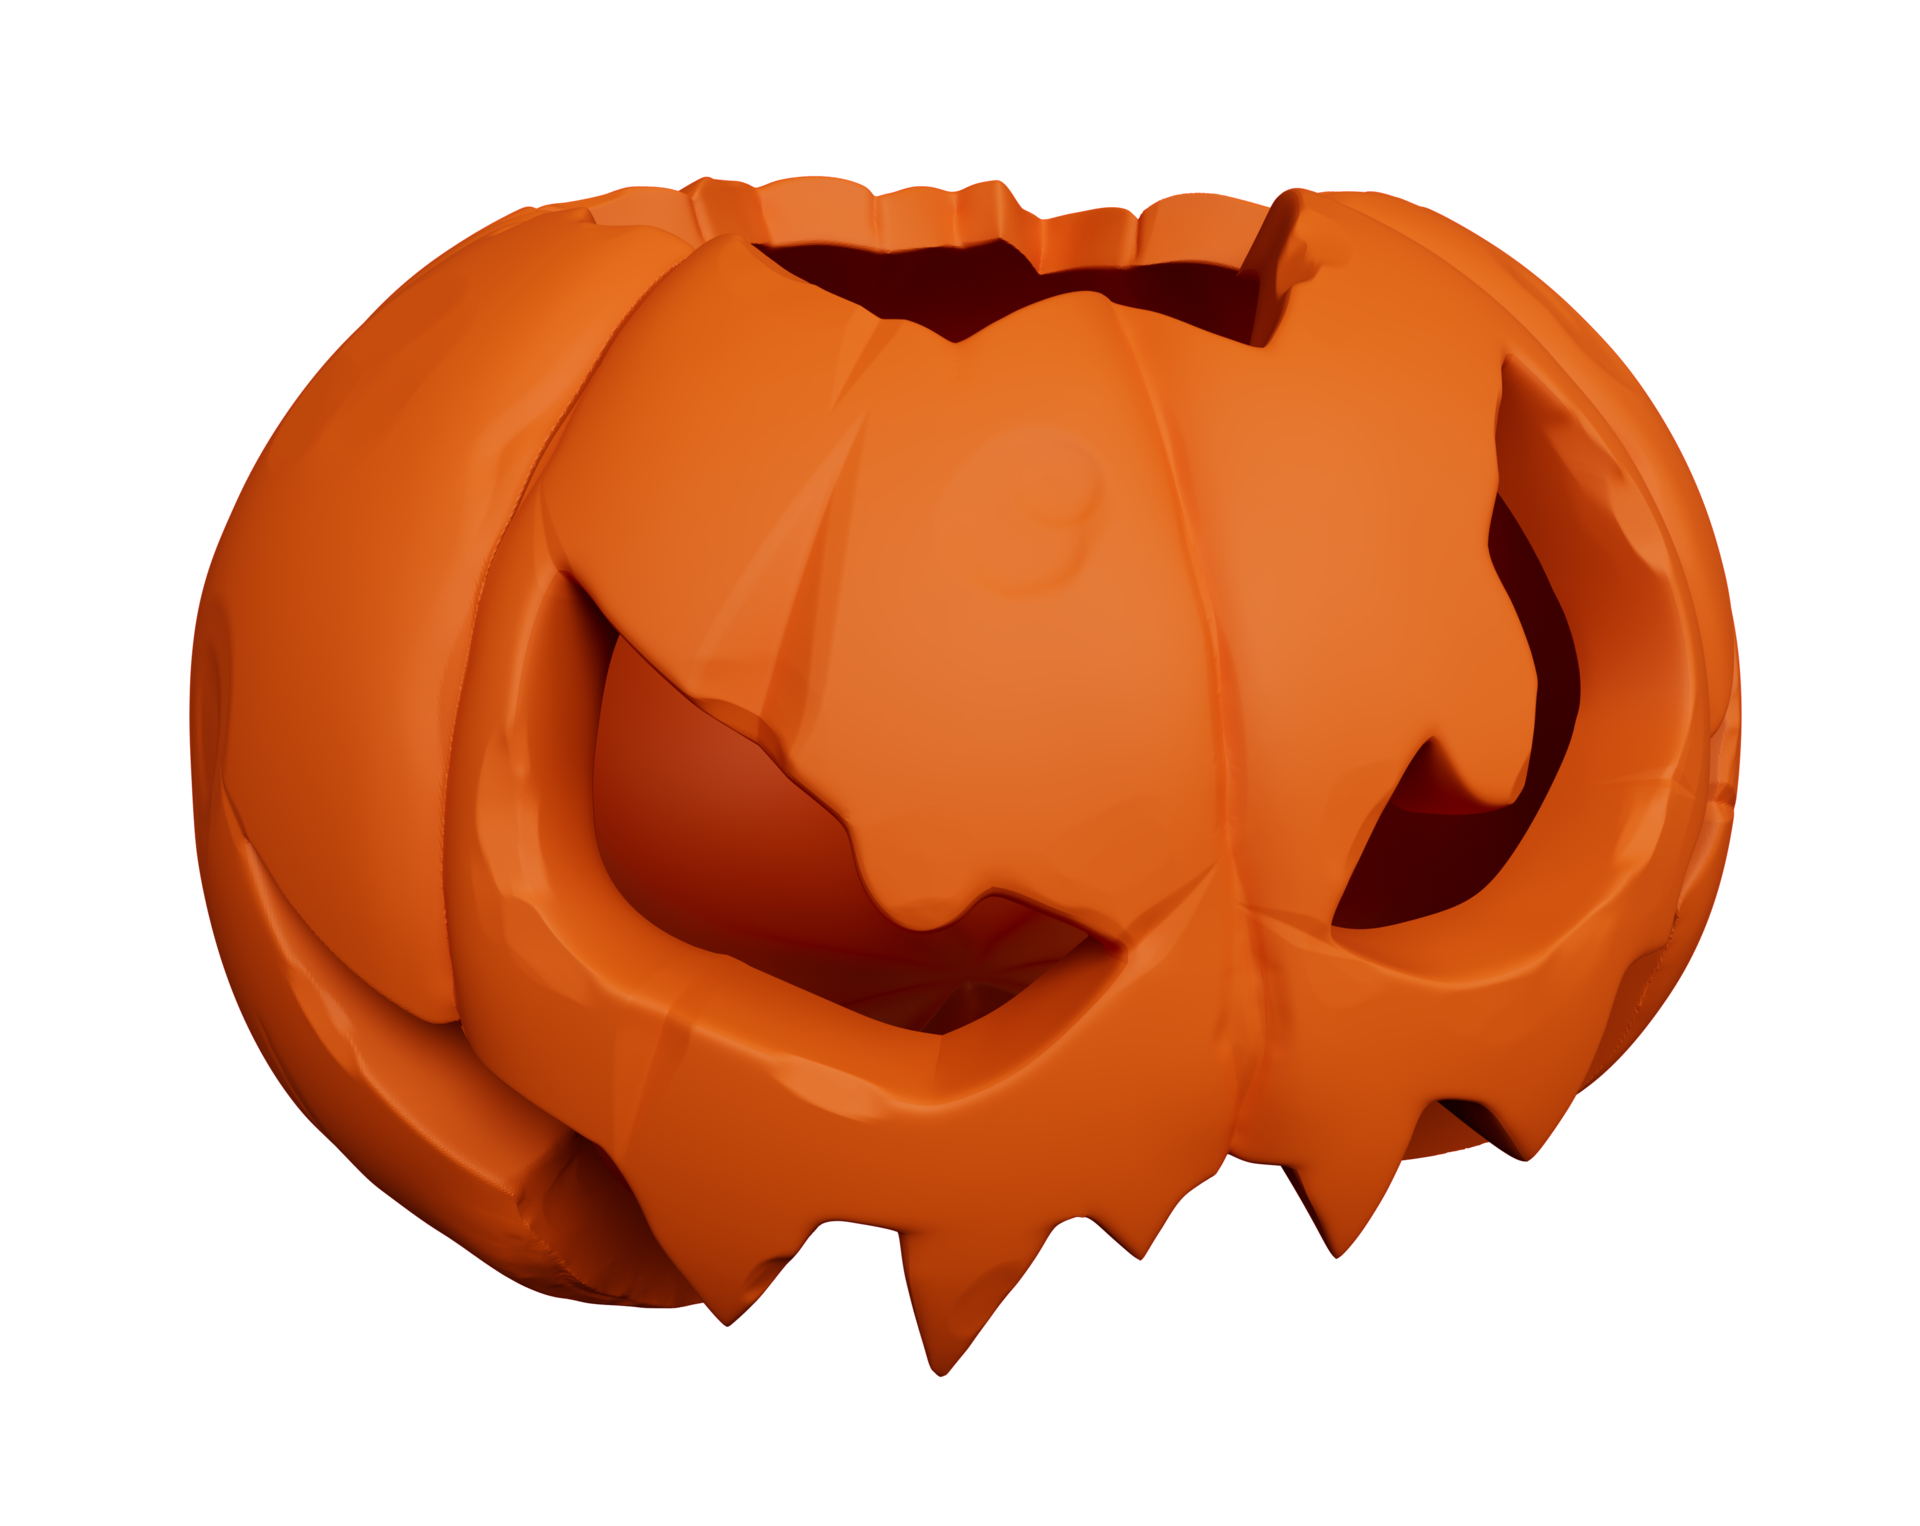 Halloween Pumpkin PNG Free Image